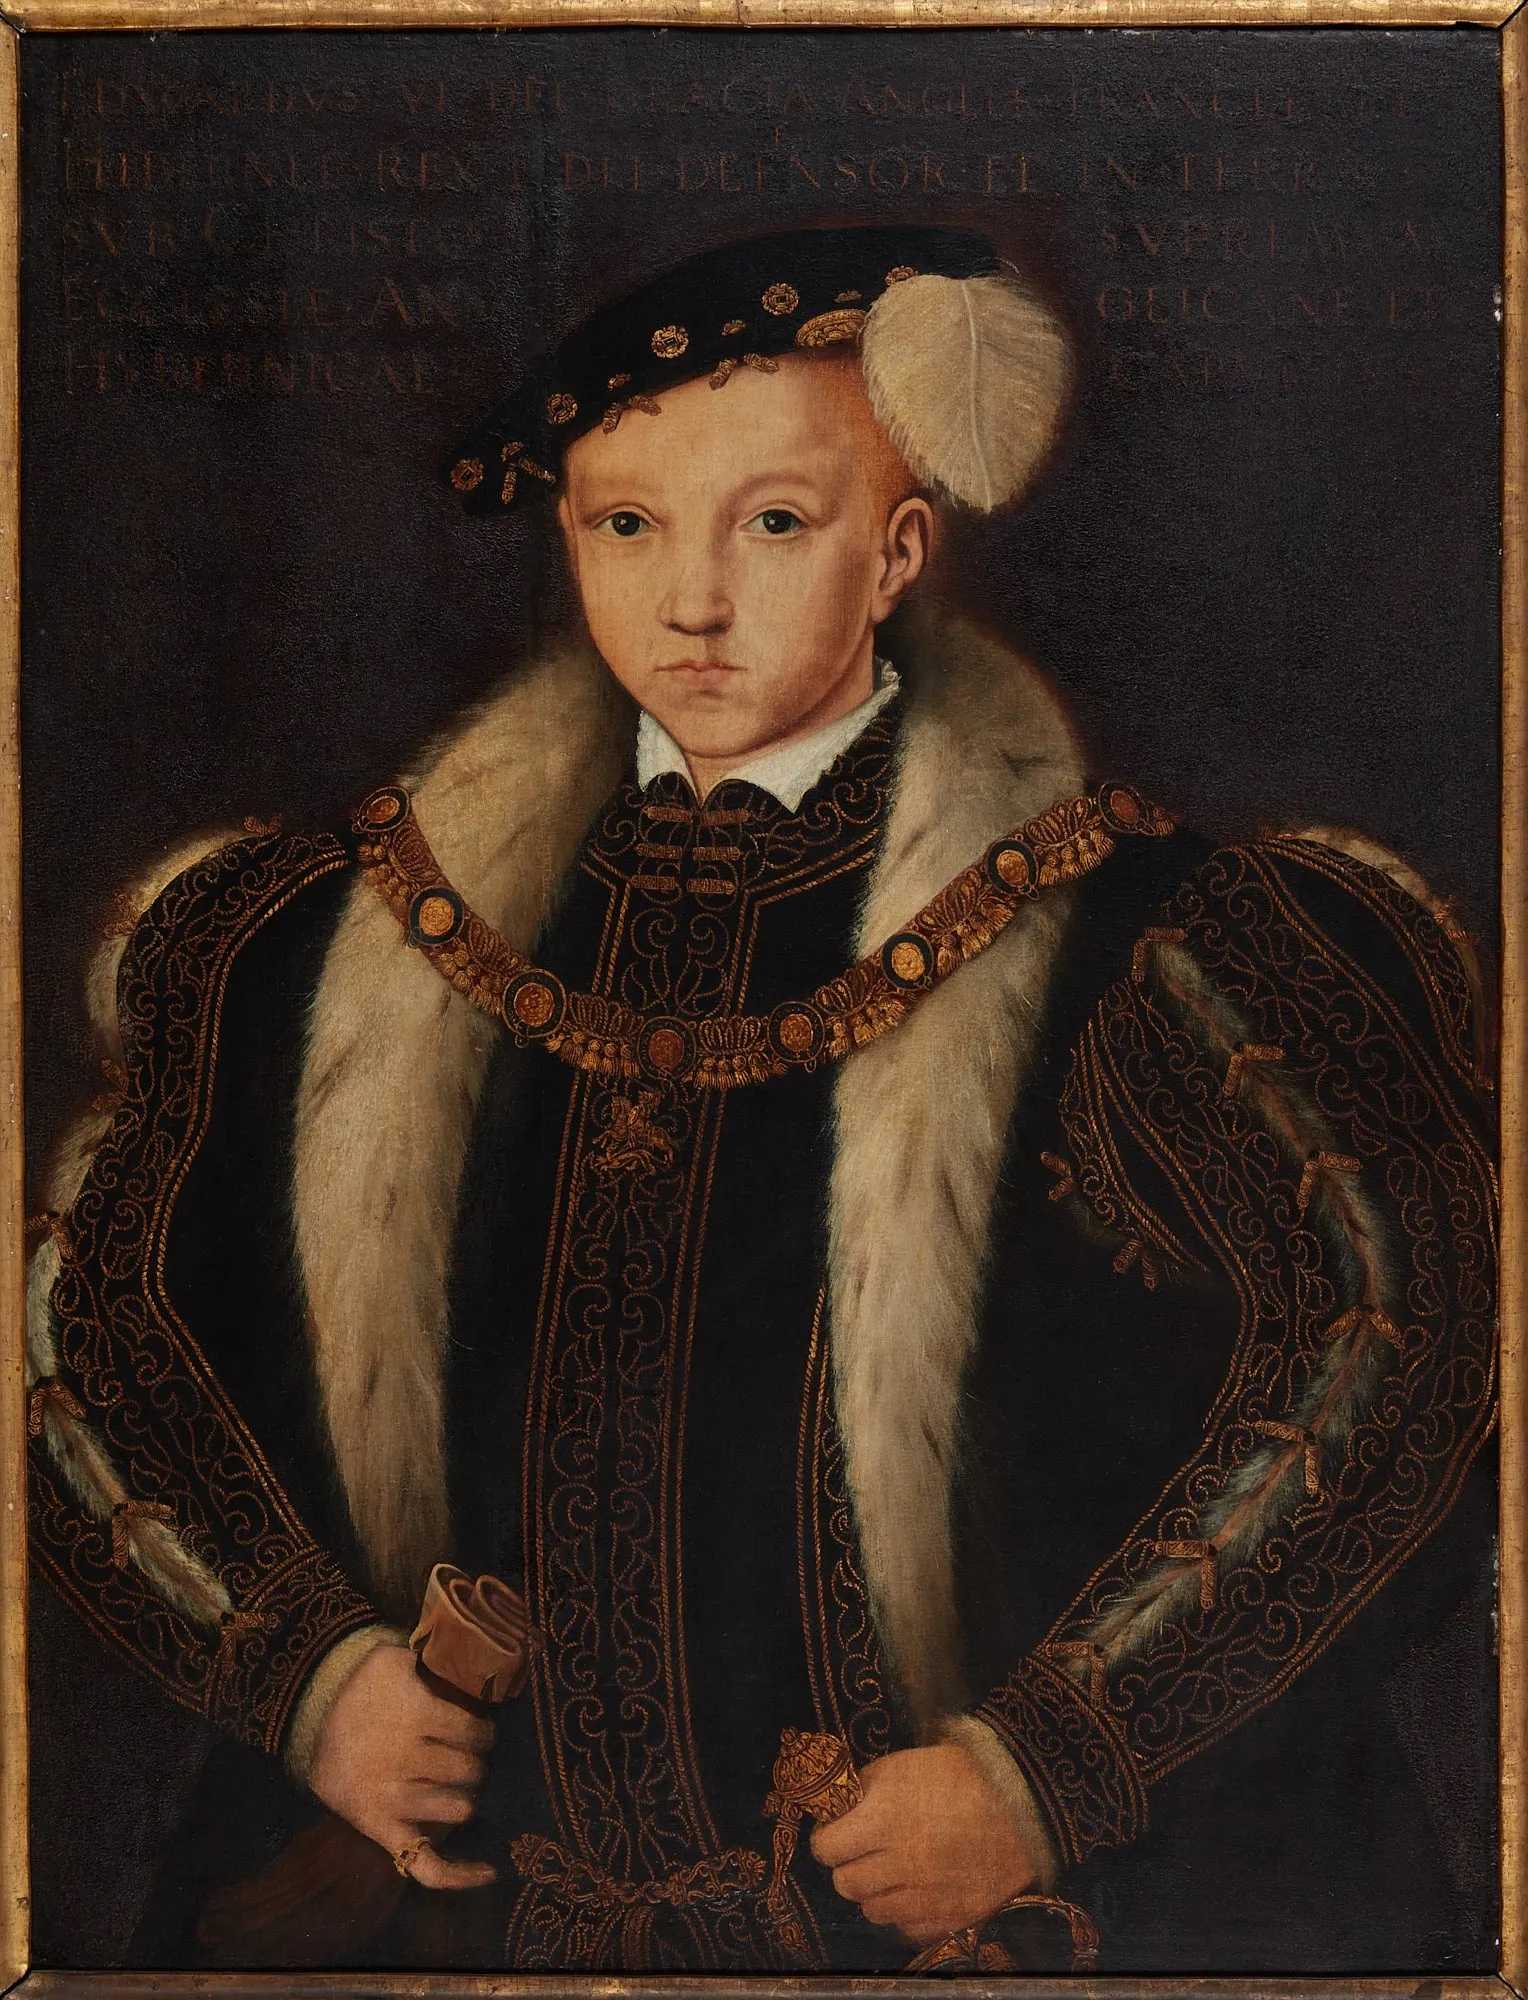 Boy-king Edward VI portrait comes for sale at Andrew Jones April 28-29